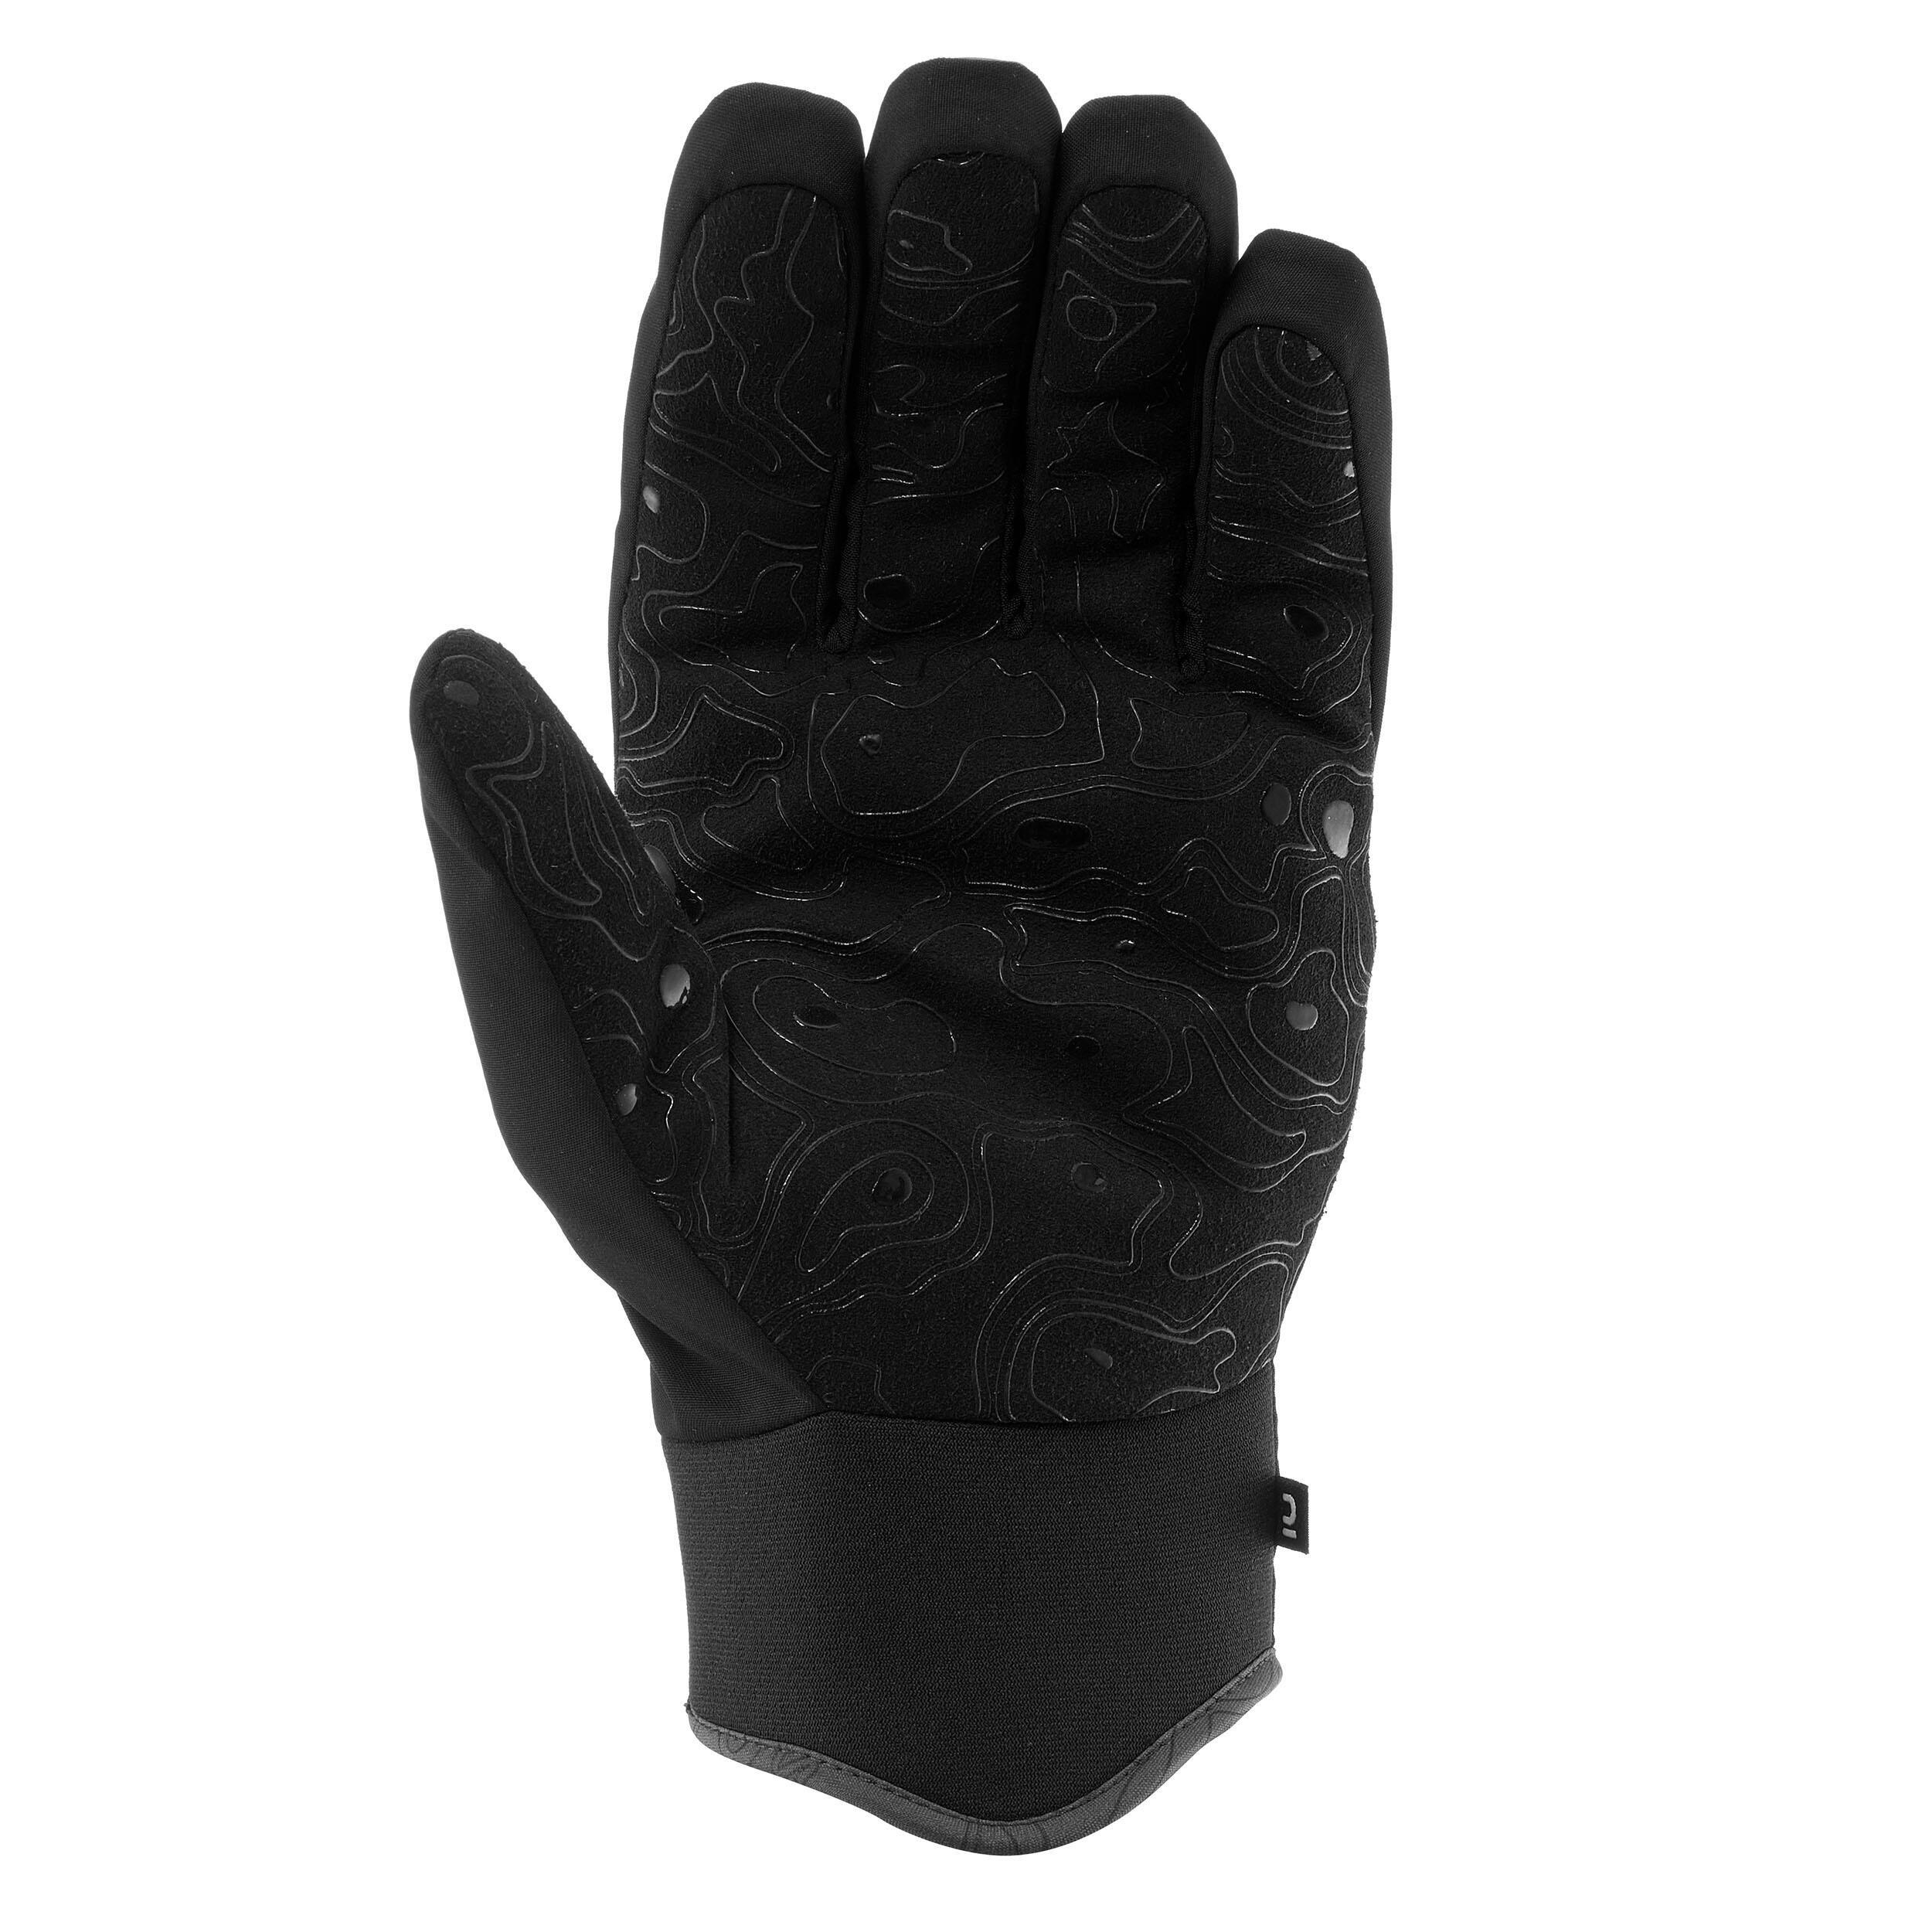 DREAMSCAPE  Handschuhe - GL-SNB 150 LIGHT 